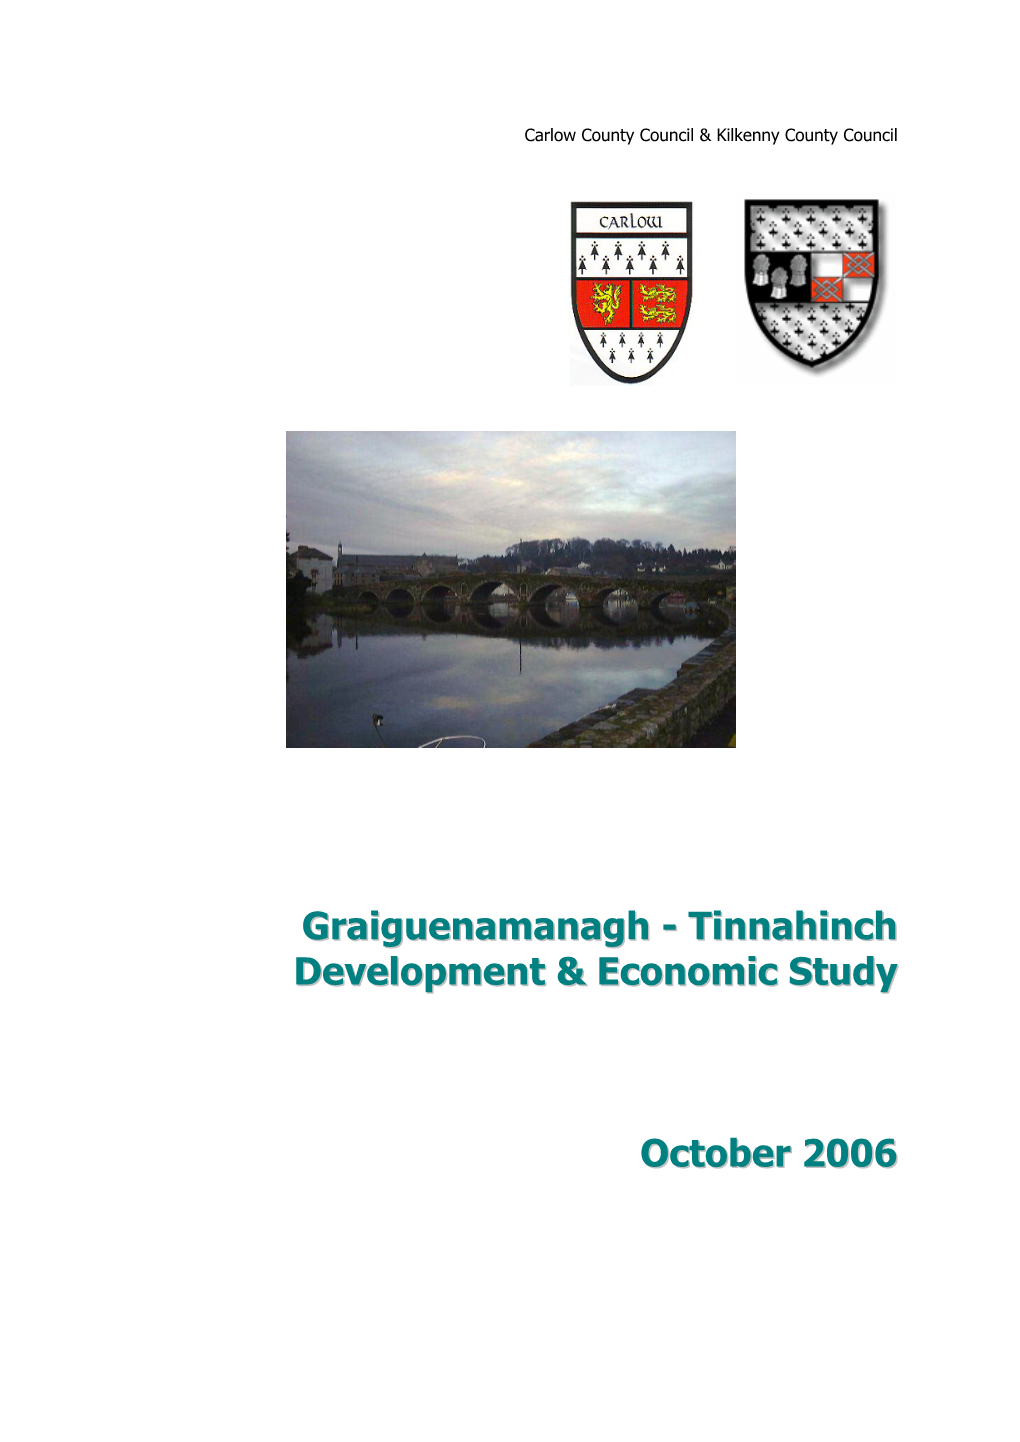 Tinnahinch Development & Economic Study October 2006